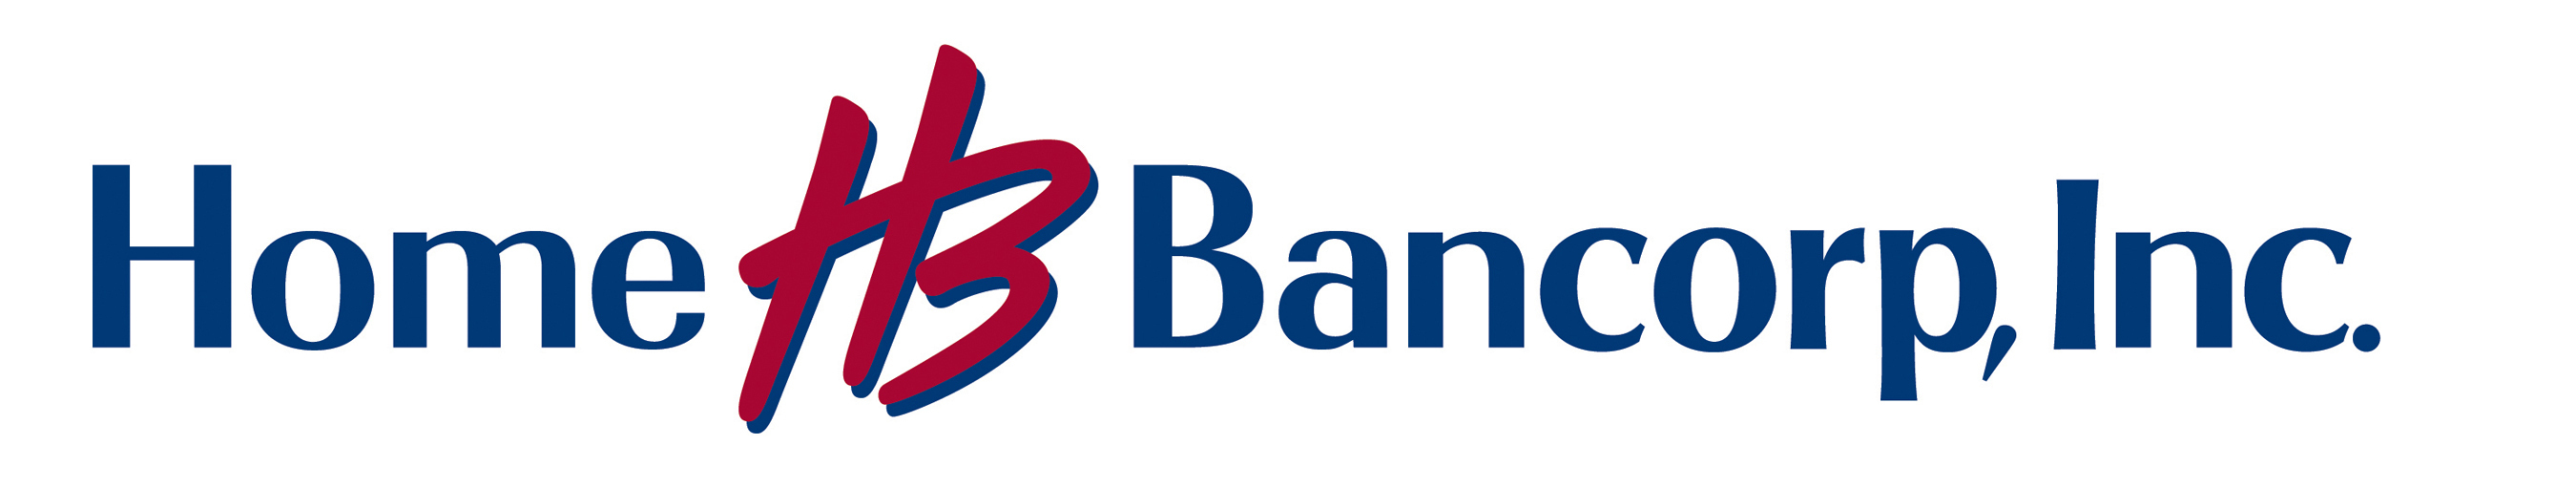 Home Bancorp, Inc.